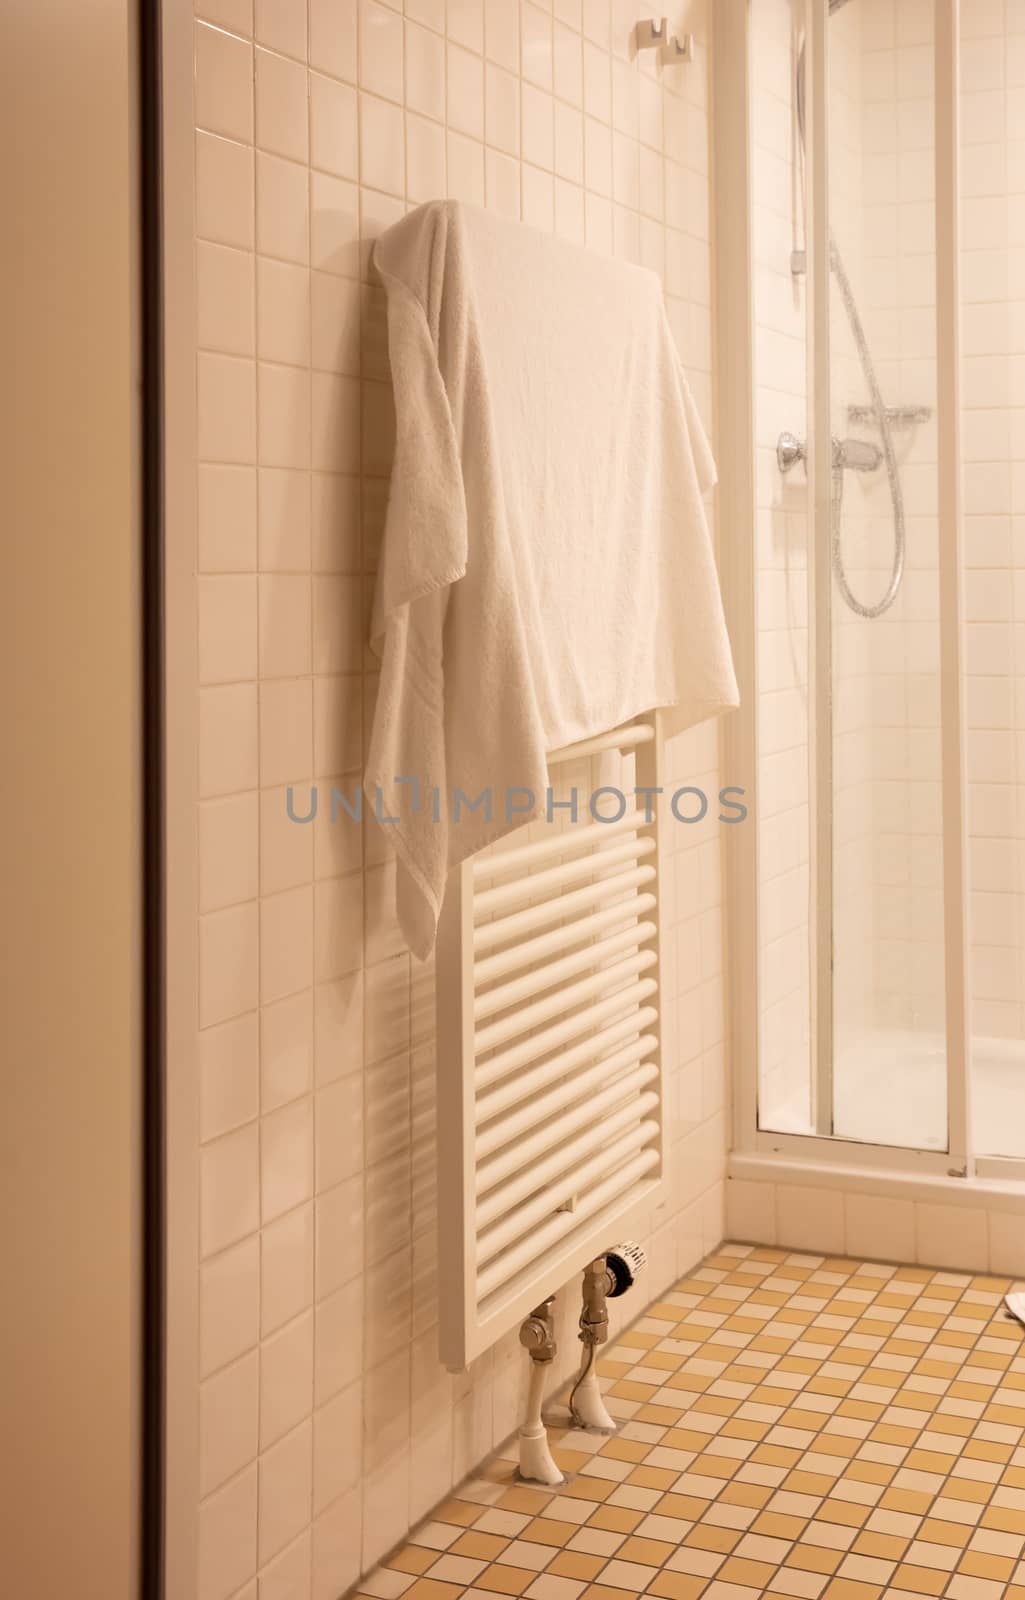 Heated towel rack in an old bathroom by michaklootwijk